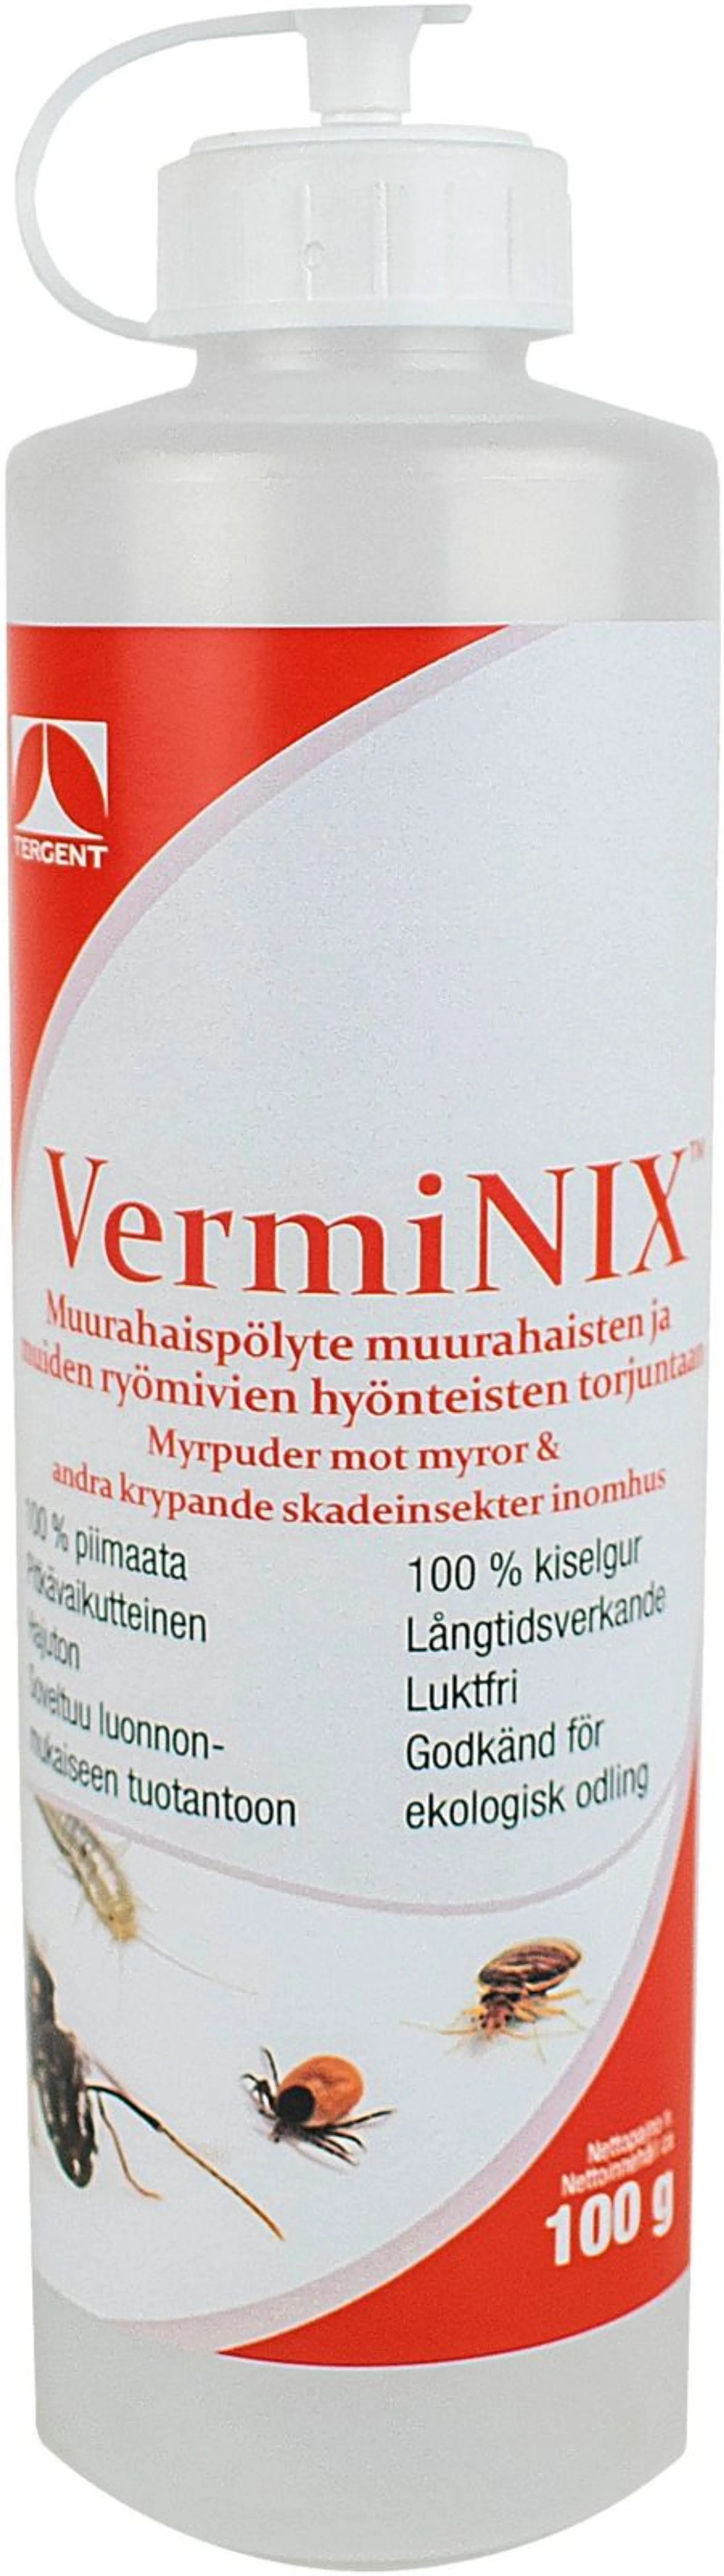 VermiNIX Muurahaispölyte 100 g